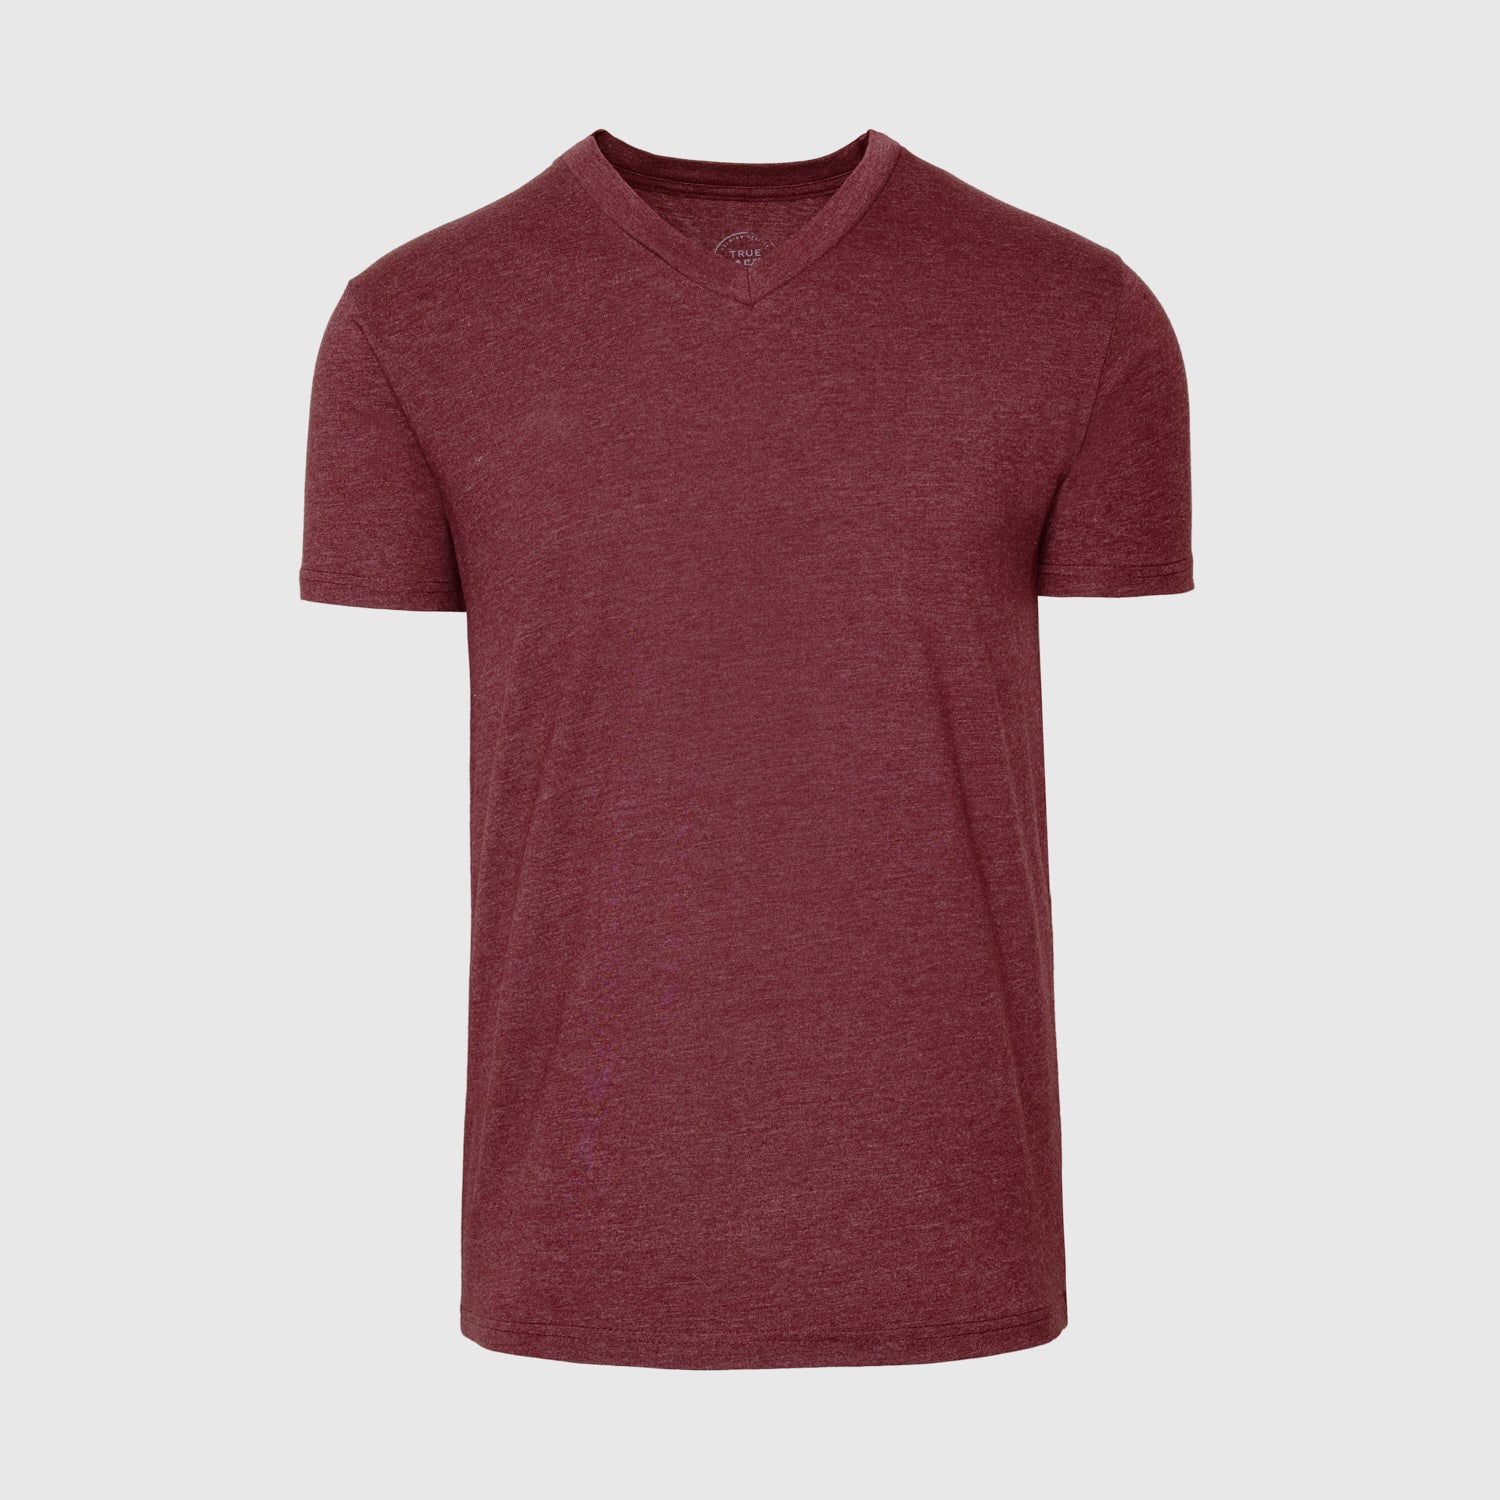 REGULAR-FIT Color Block Raglan T-Shirt for Tall Men in Charcoal Heather &  Burgundy